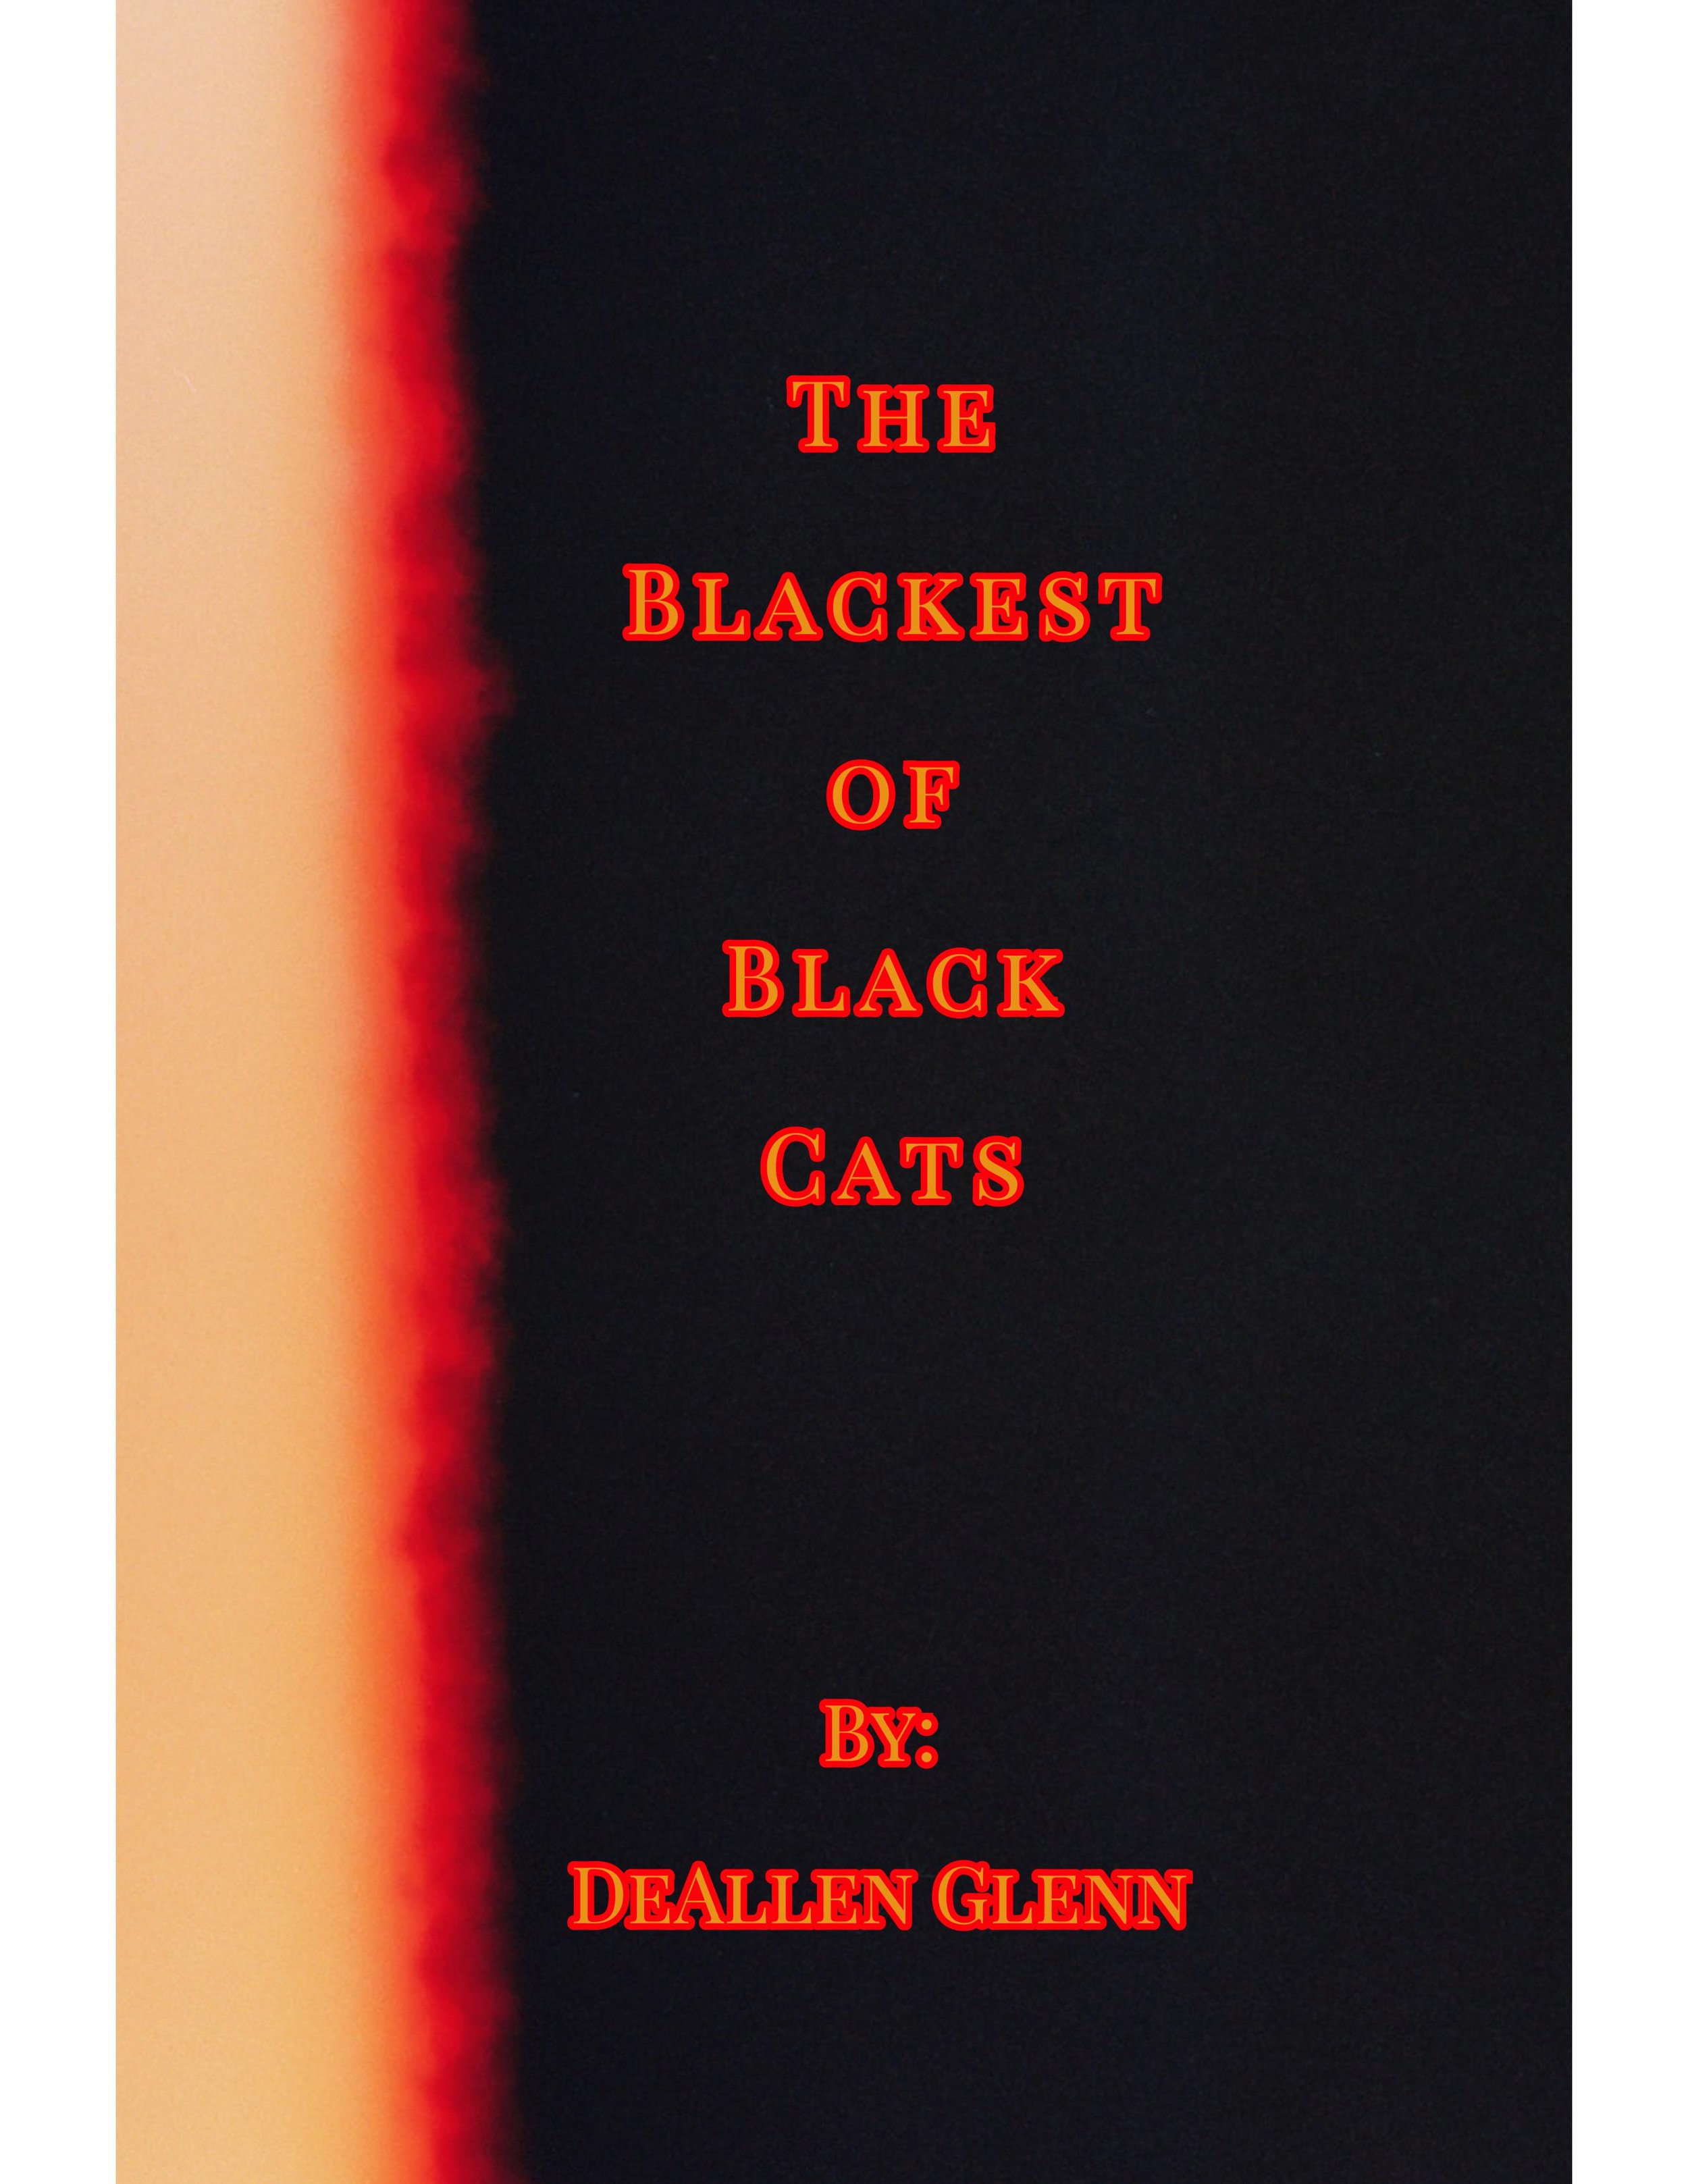 The Blackest of Black Cats COVER - BlckCat.jpg